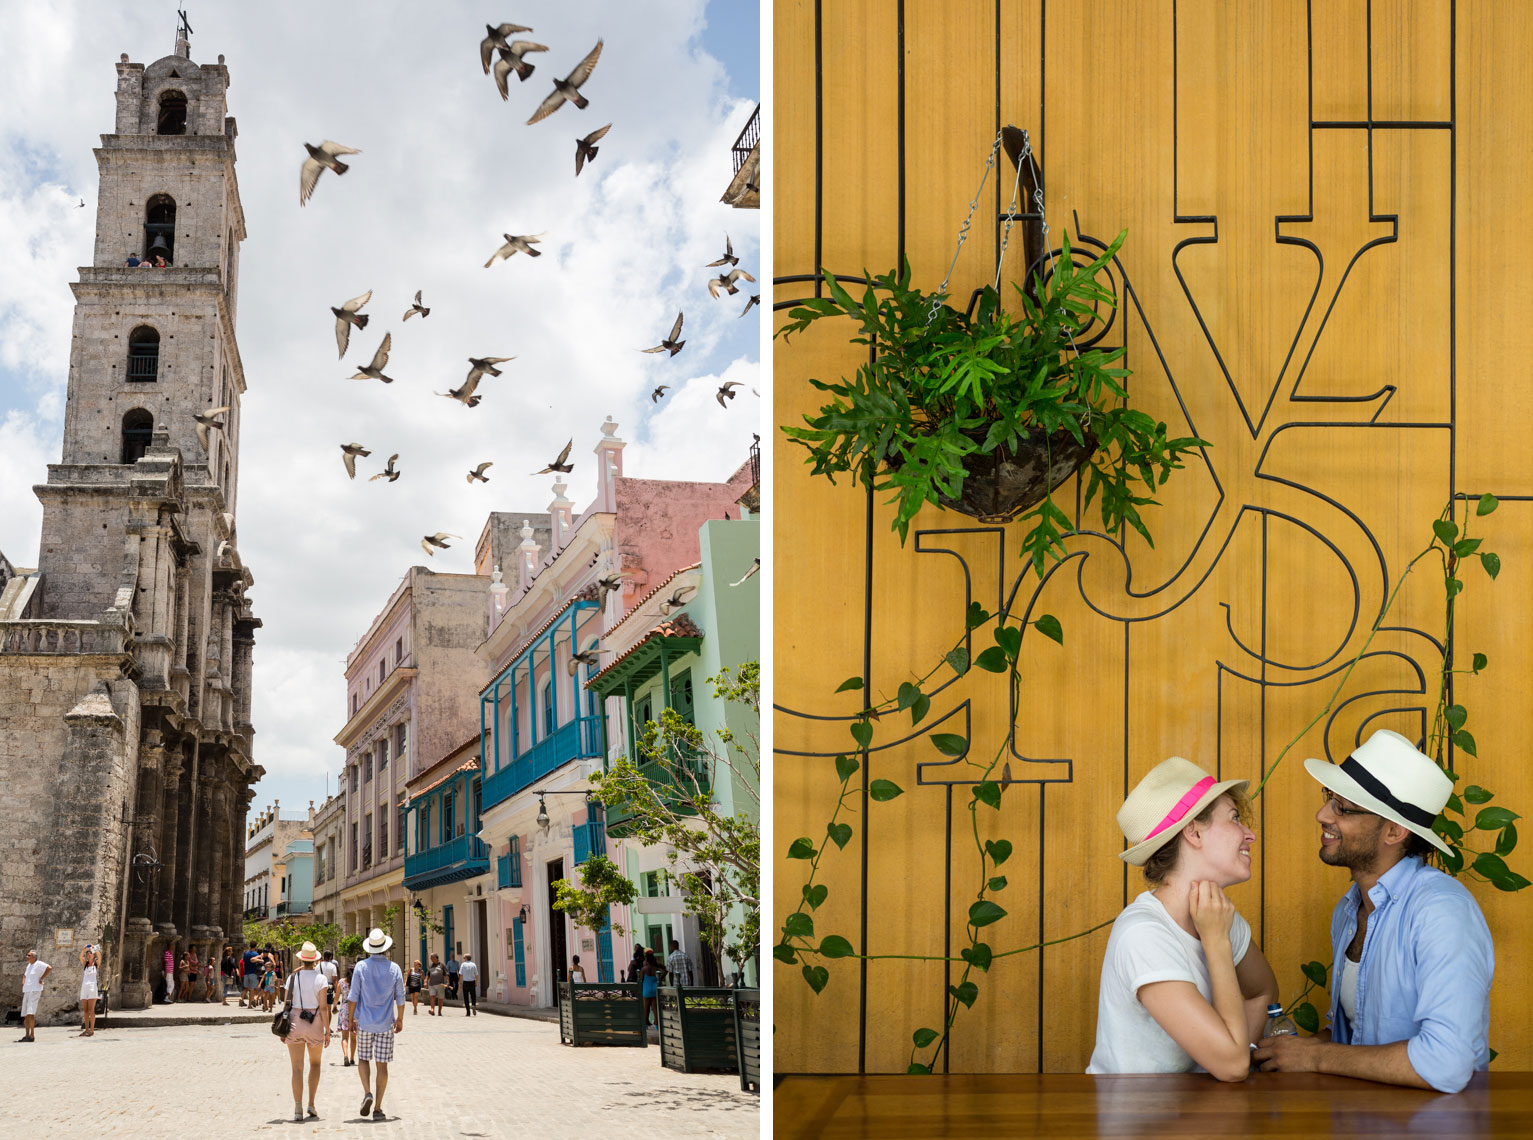 Cuba tourism